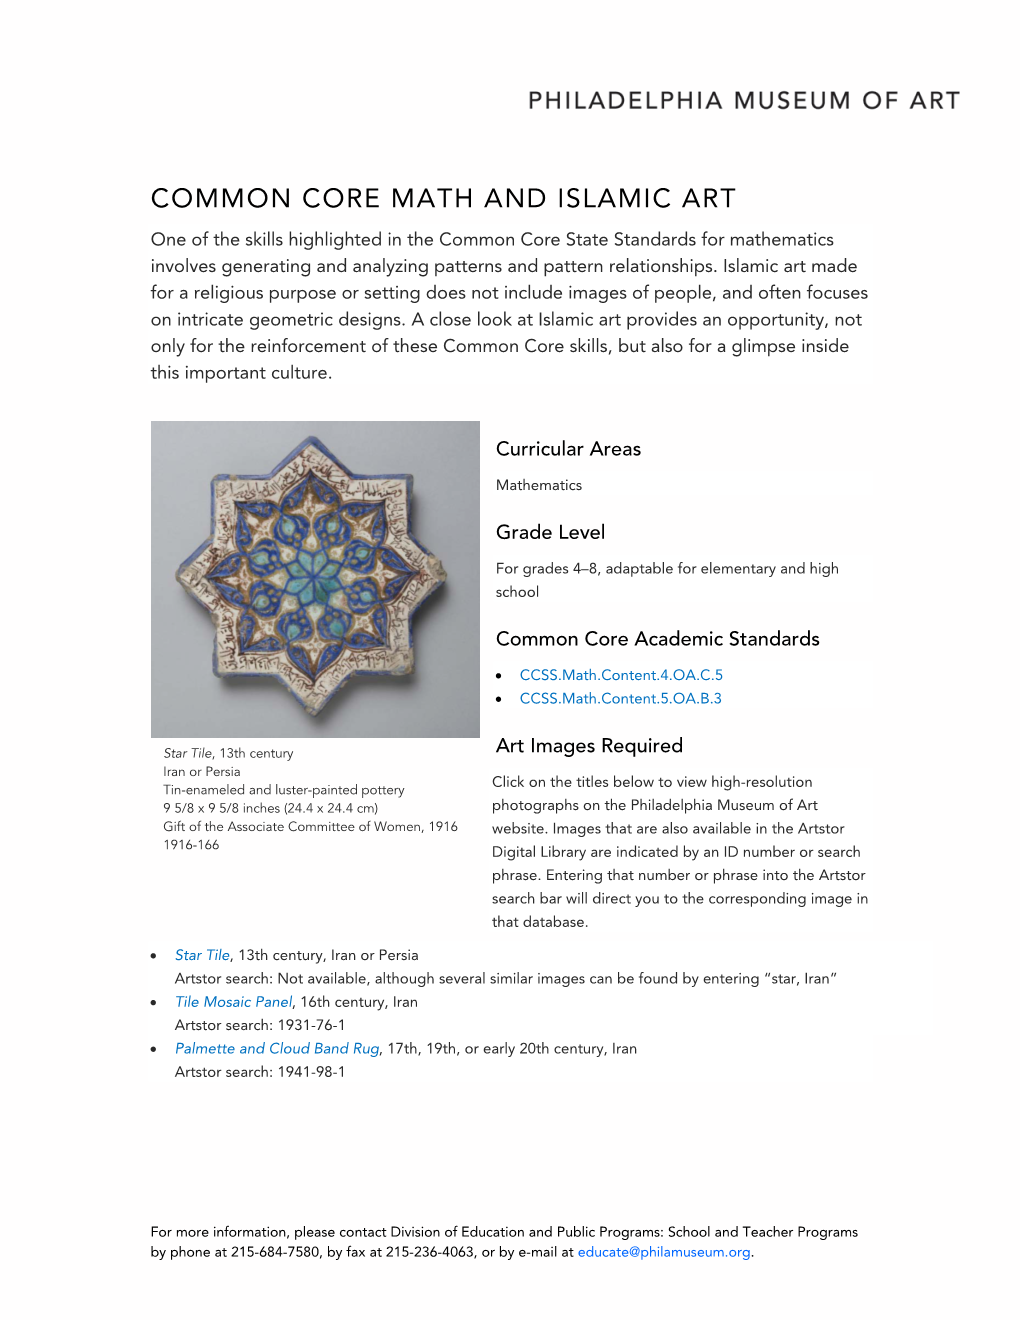 Common Core Math and Islamic